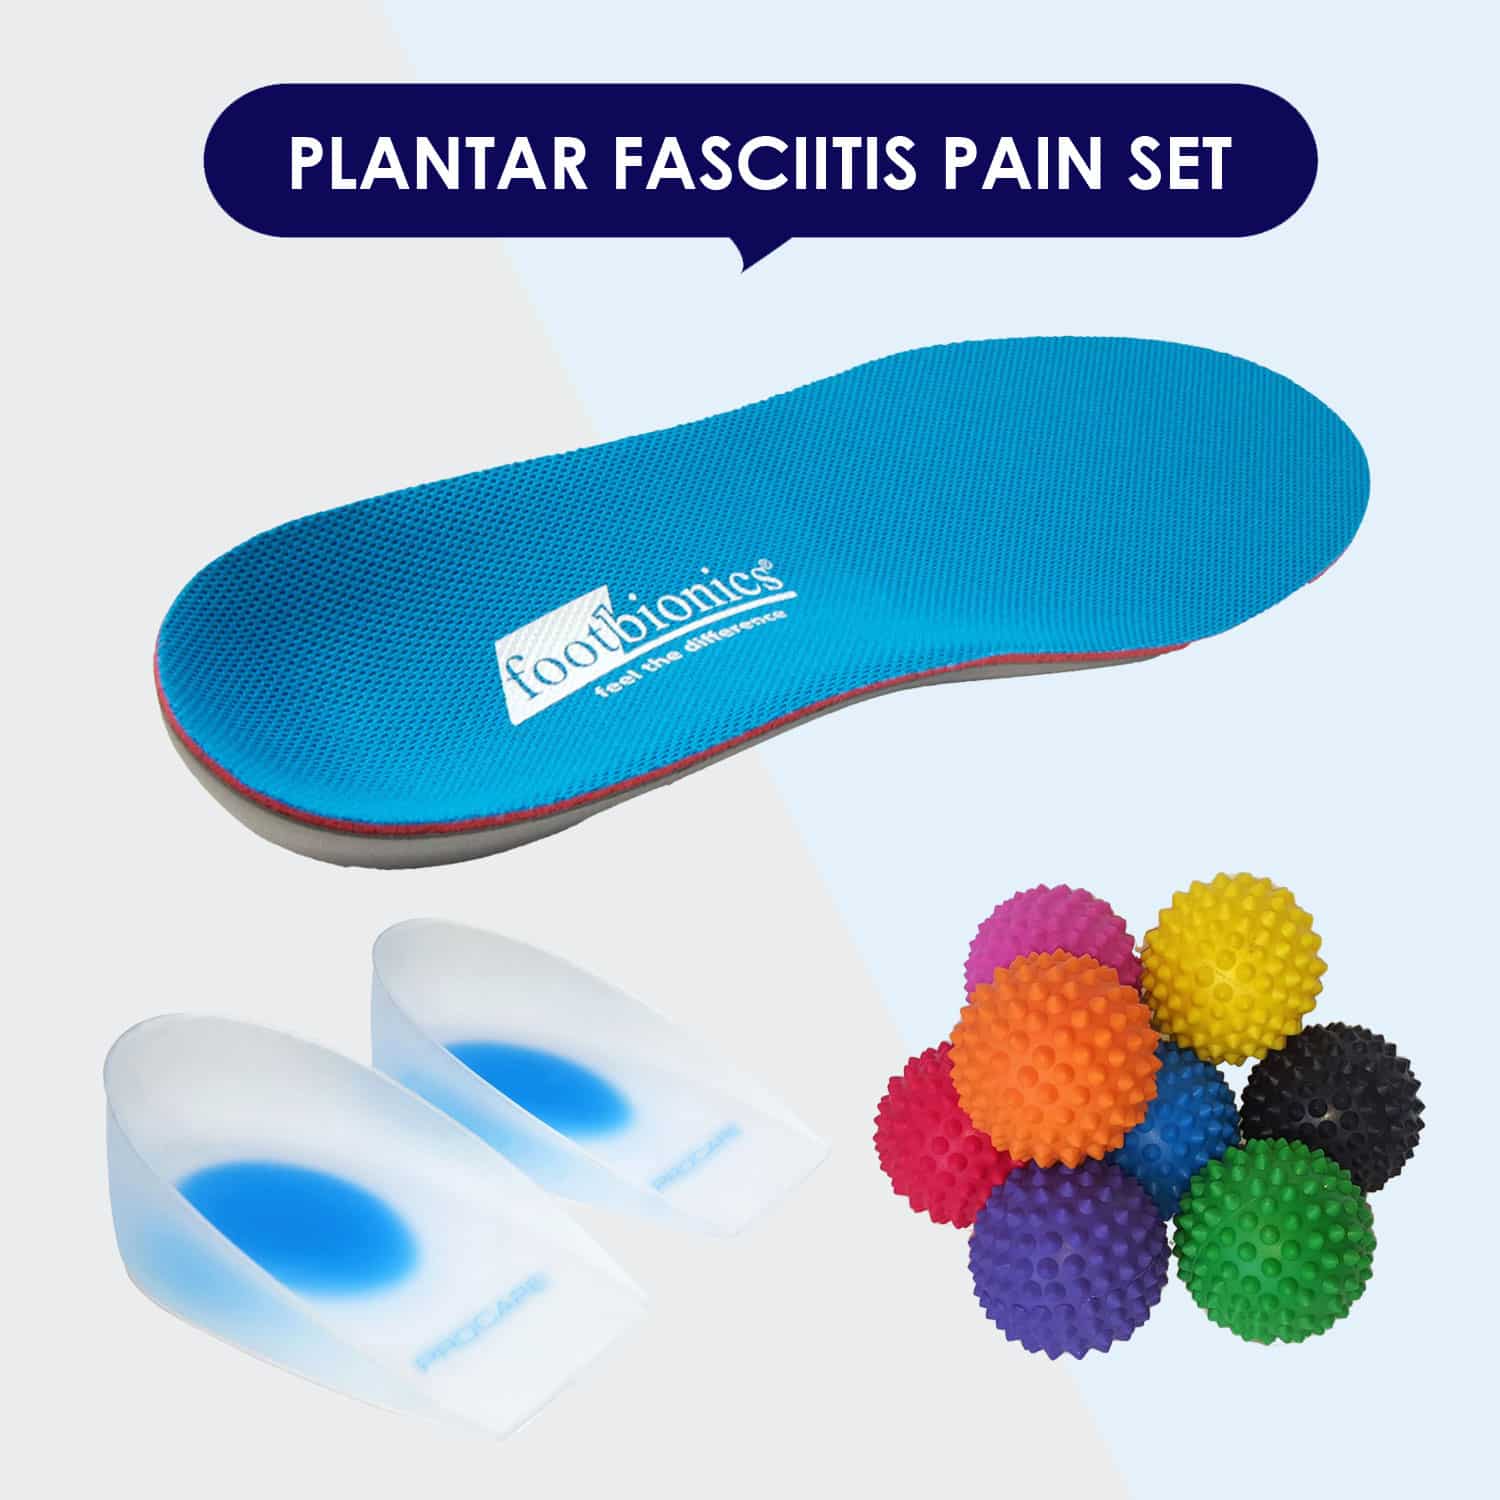 Plantar Fasciitis Pain Set